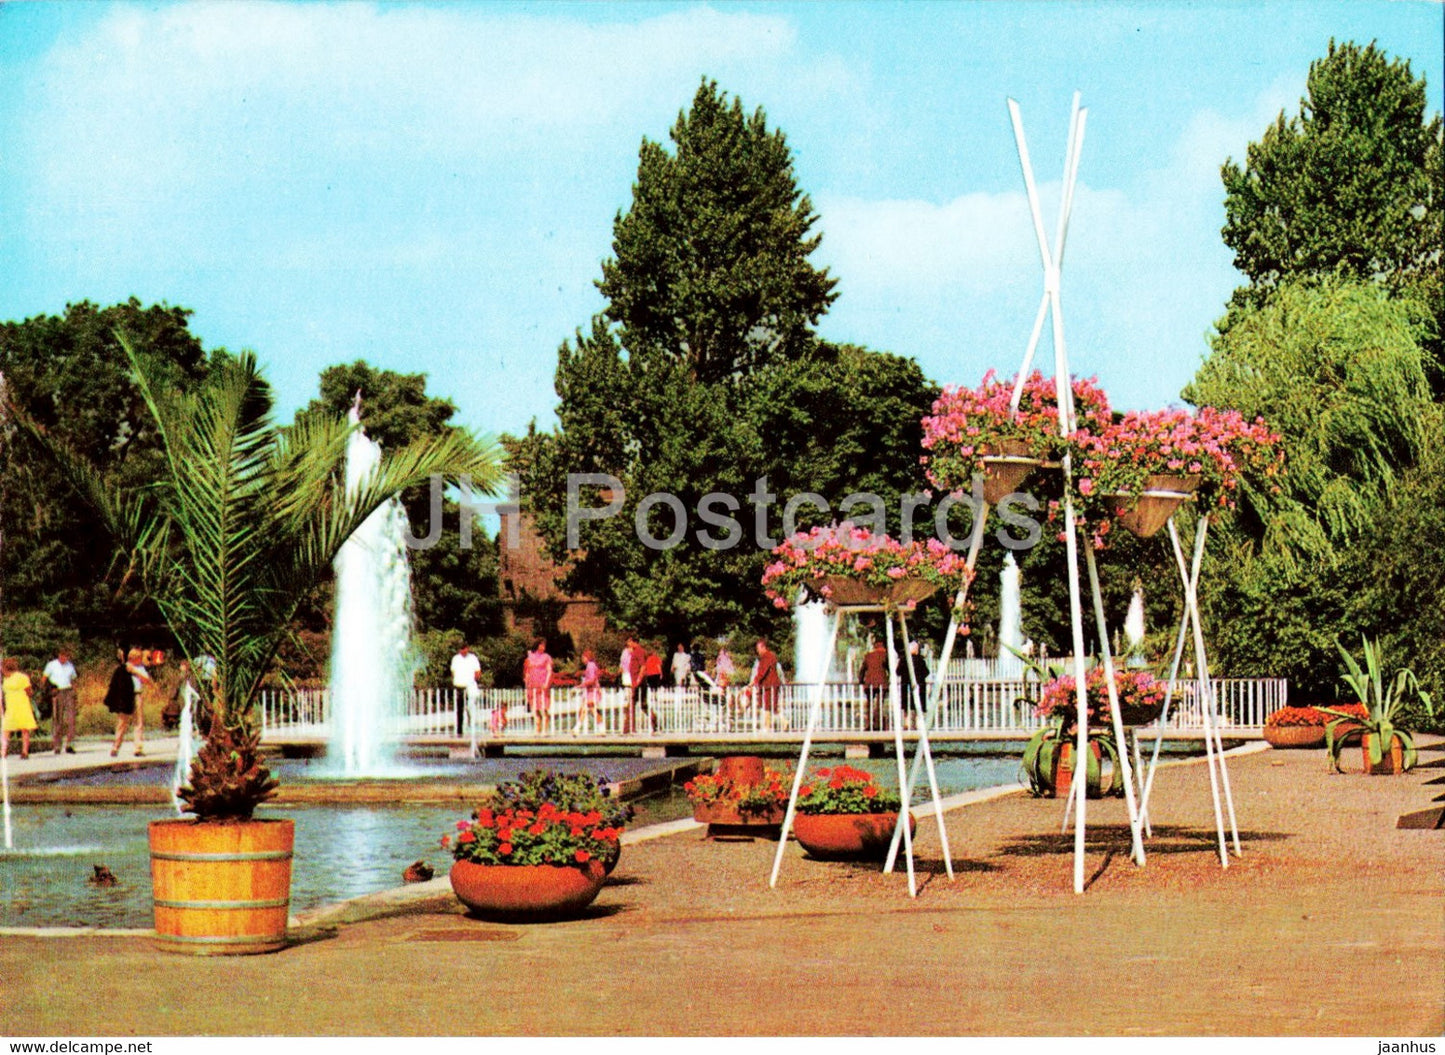 Iga Erfurt - An der Wasserachse - Germany DDR - unused - JH Postcards